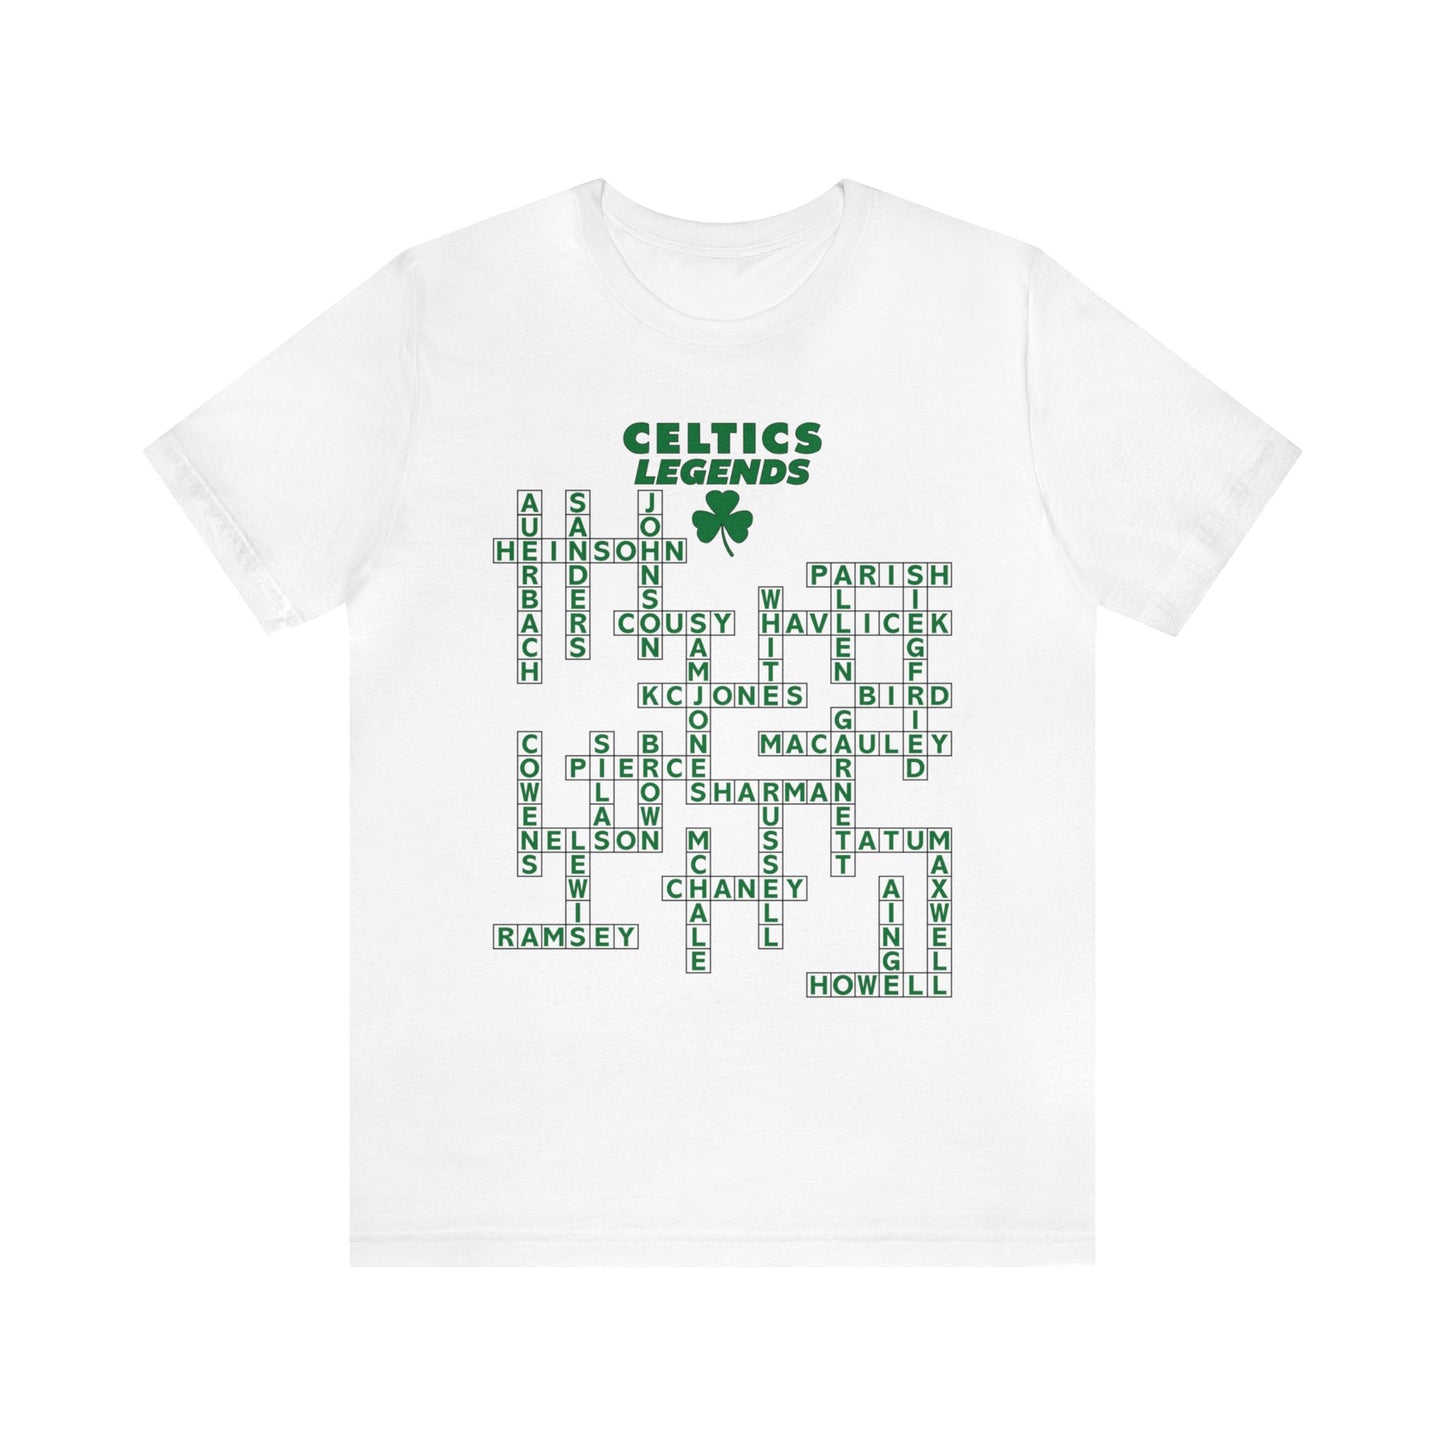 Celtics Legends Crossword - Unisex T-Shirt